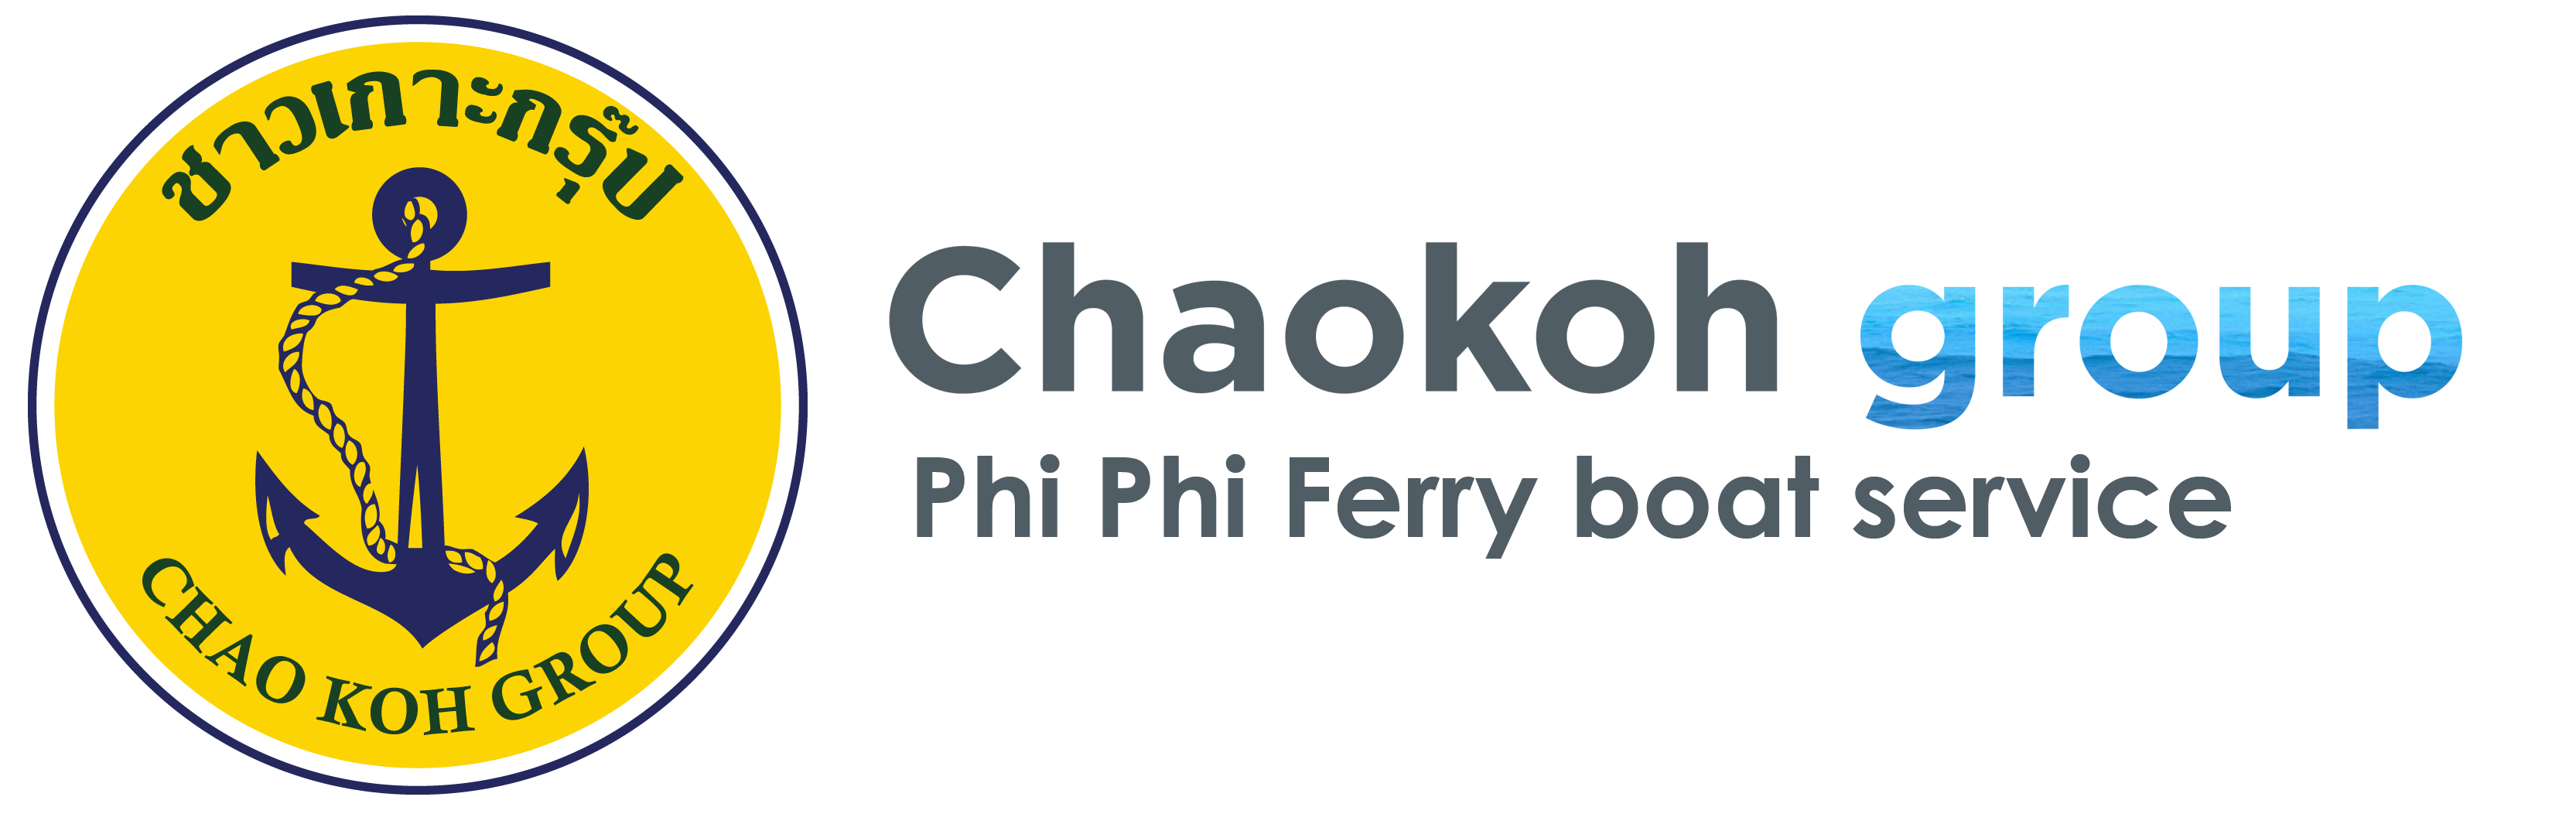 Chao Koh Group logo